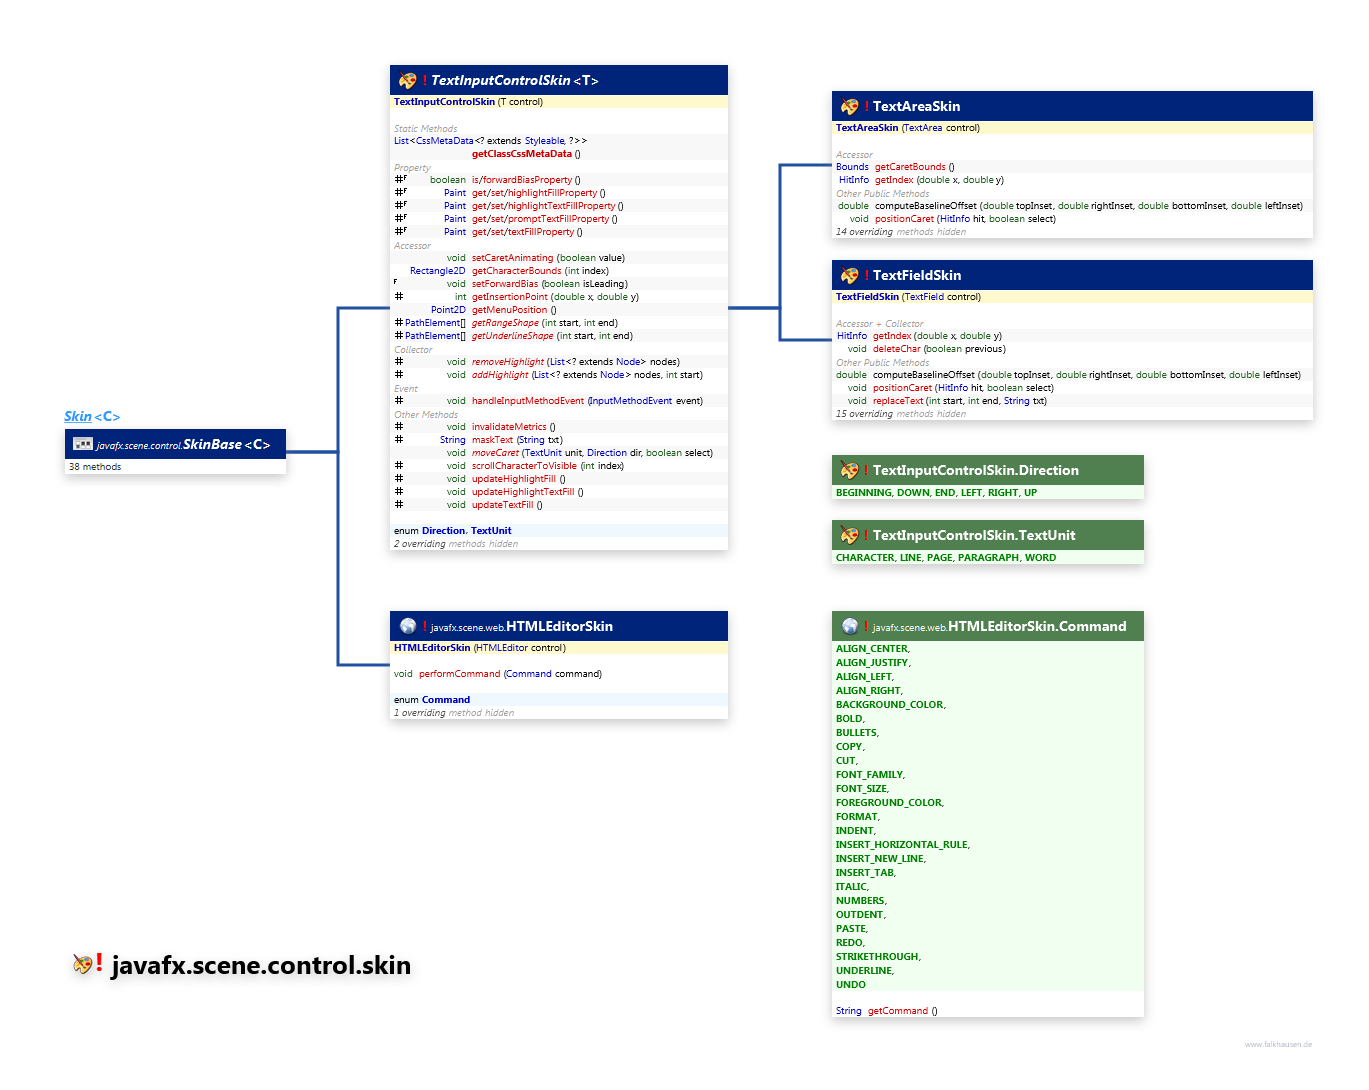 javafx.scene.control.skin TextSkins class diagram and api documentation for JavaFX 10